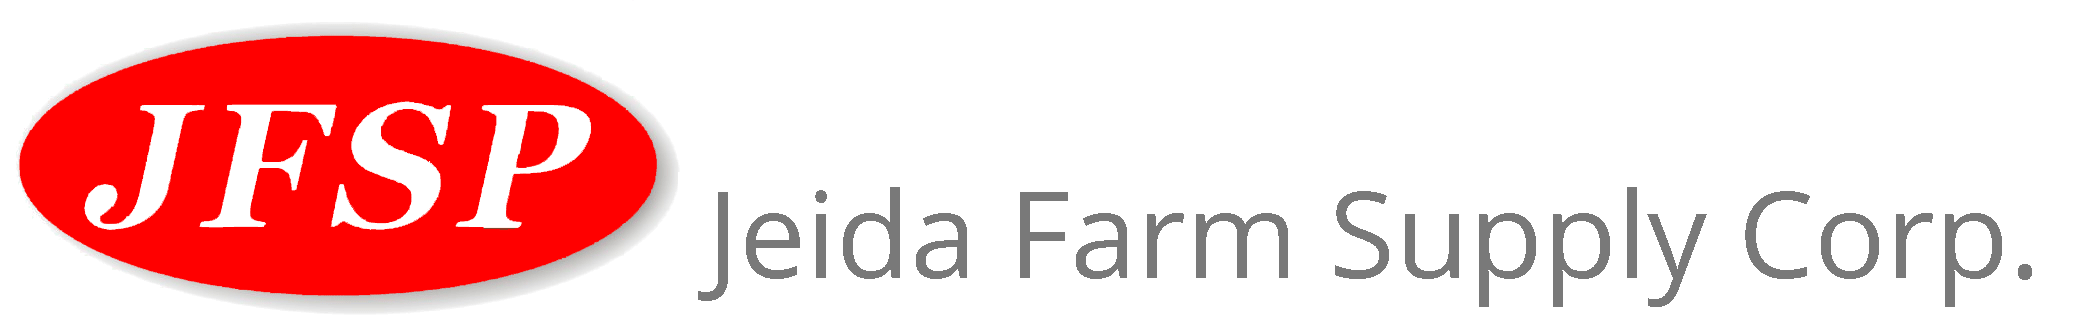 Jeida Farm Supply Corp.